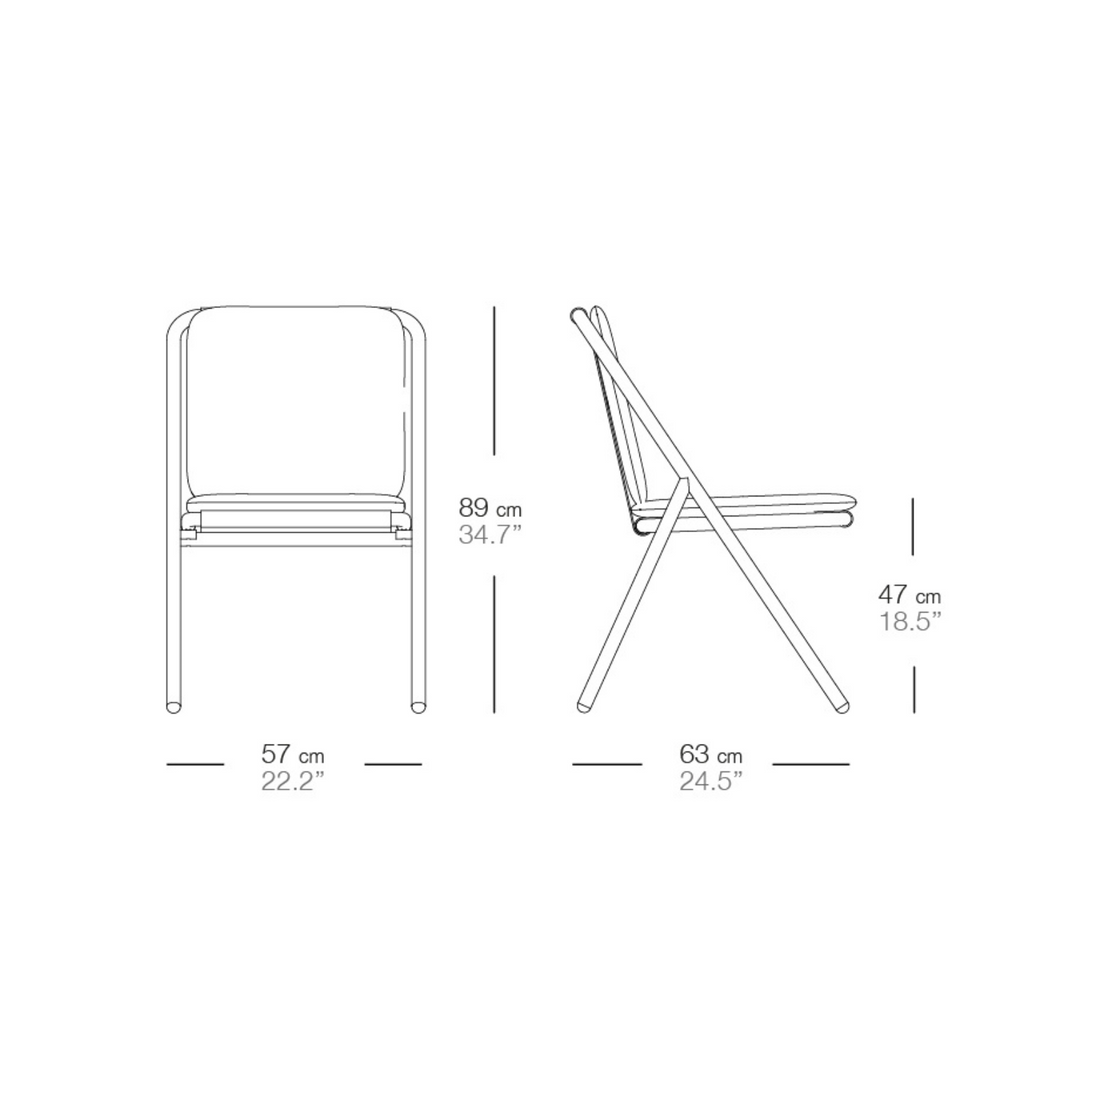 BIVAP Garda Dining Chair Dimensions